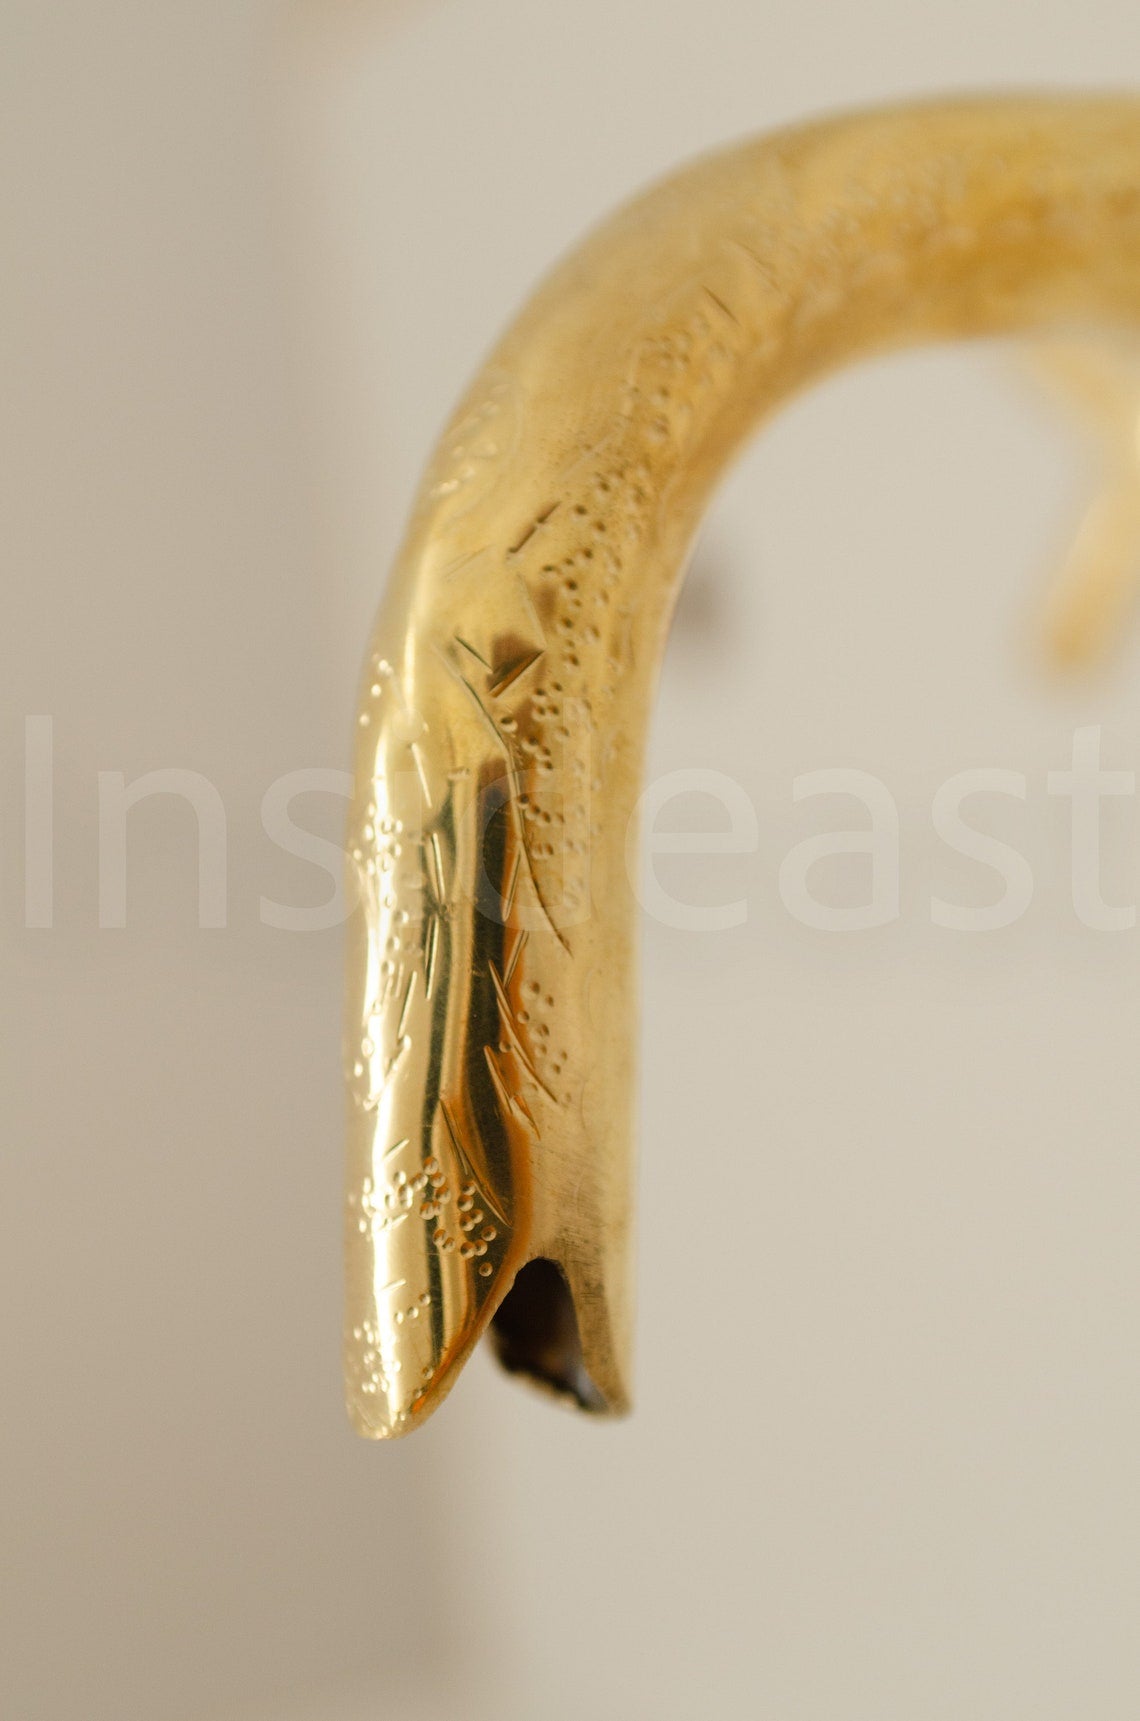 Unlacquered Brass Bathroom Faucet - Wall Mount Faucet